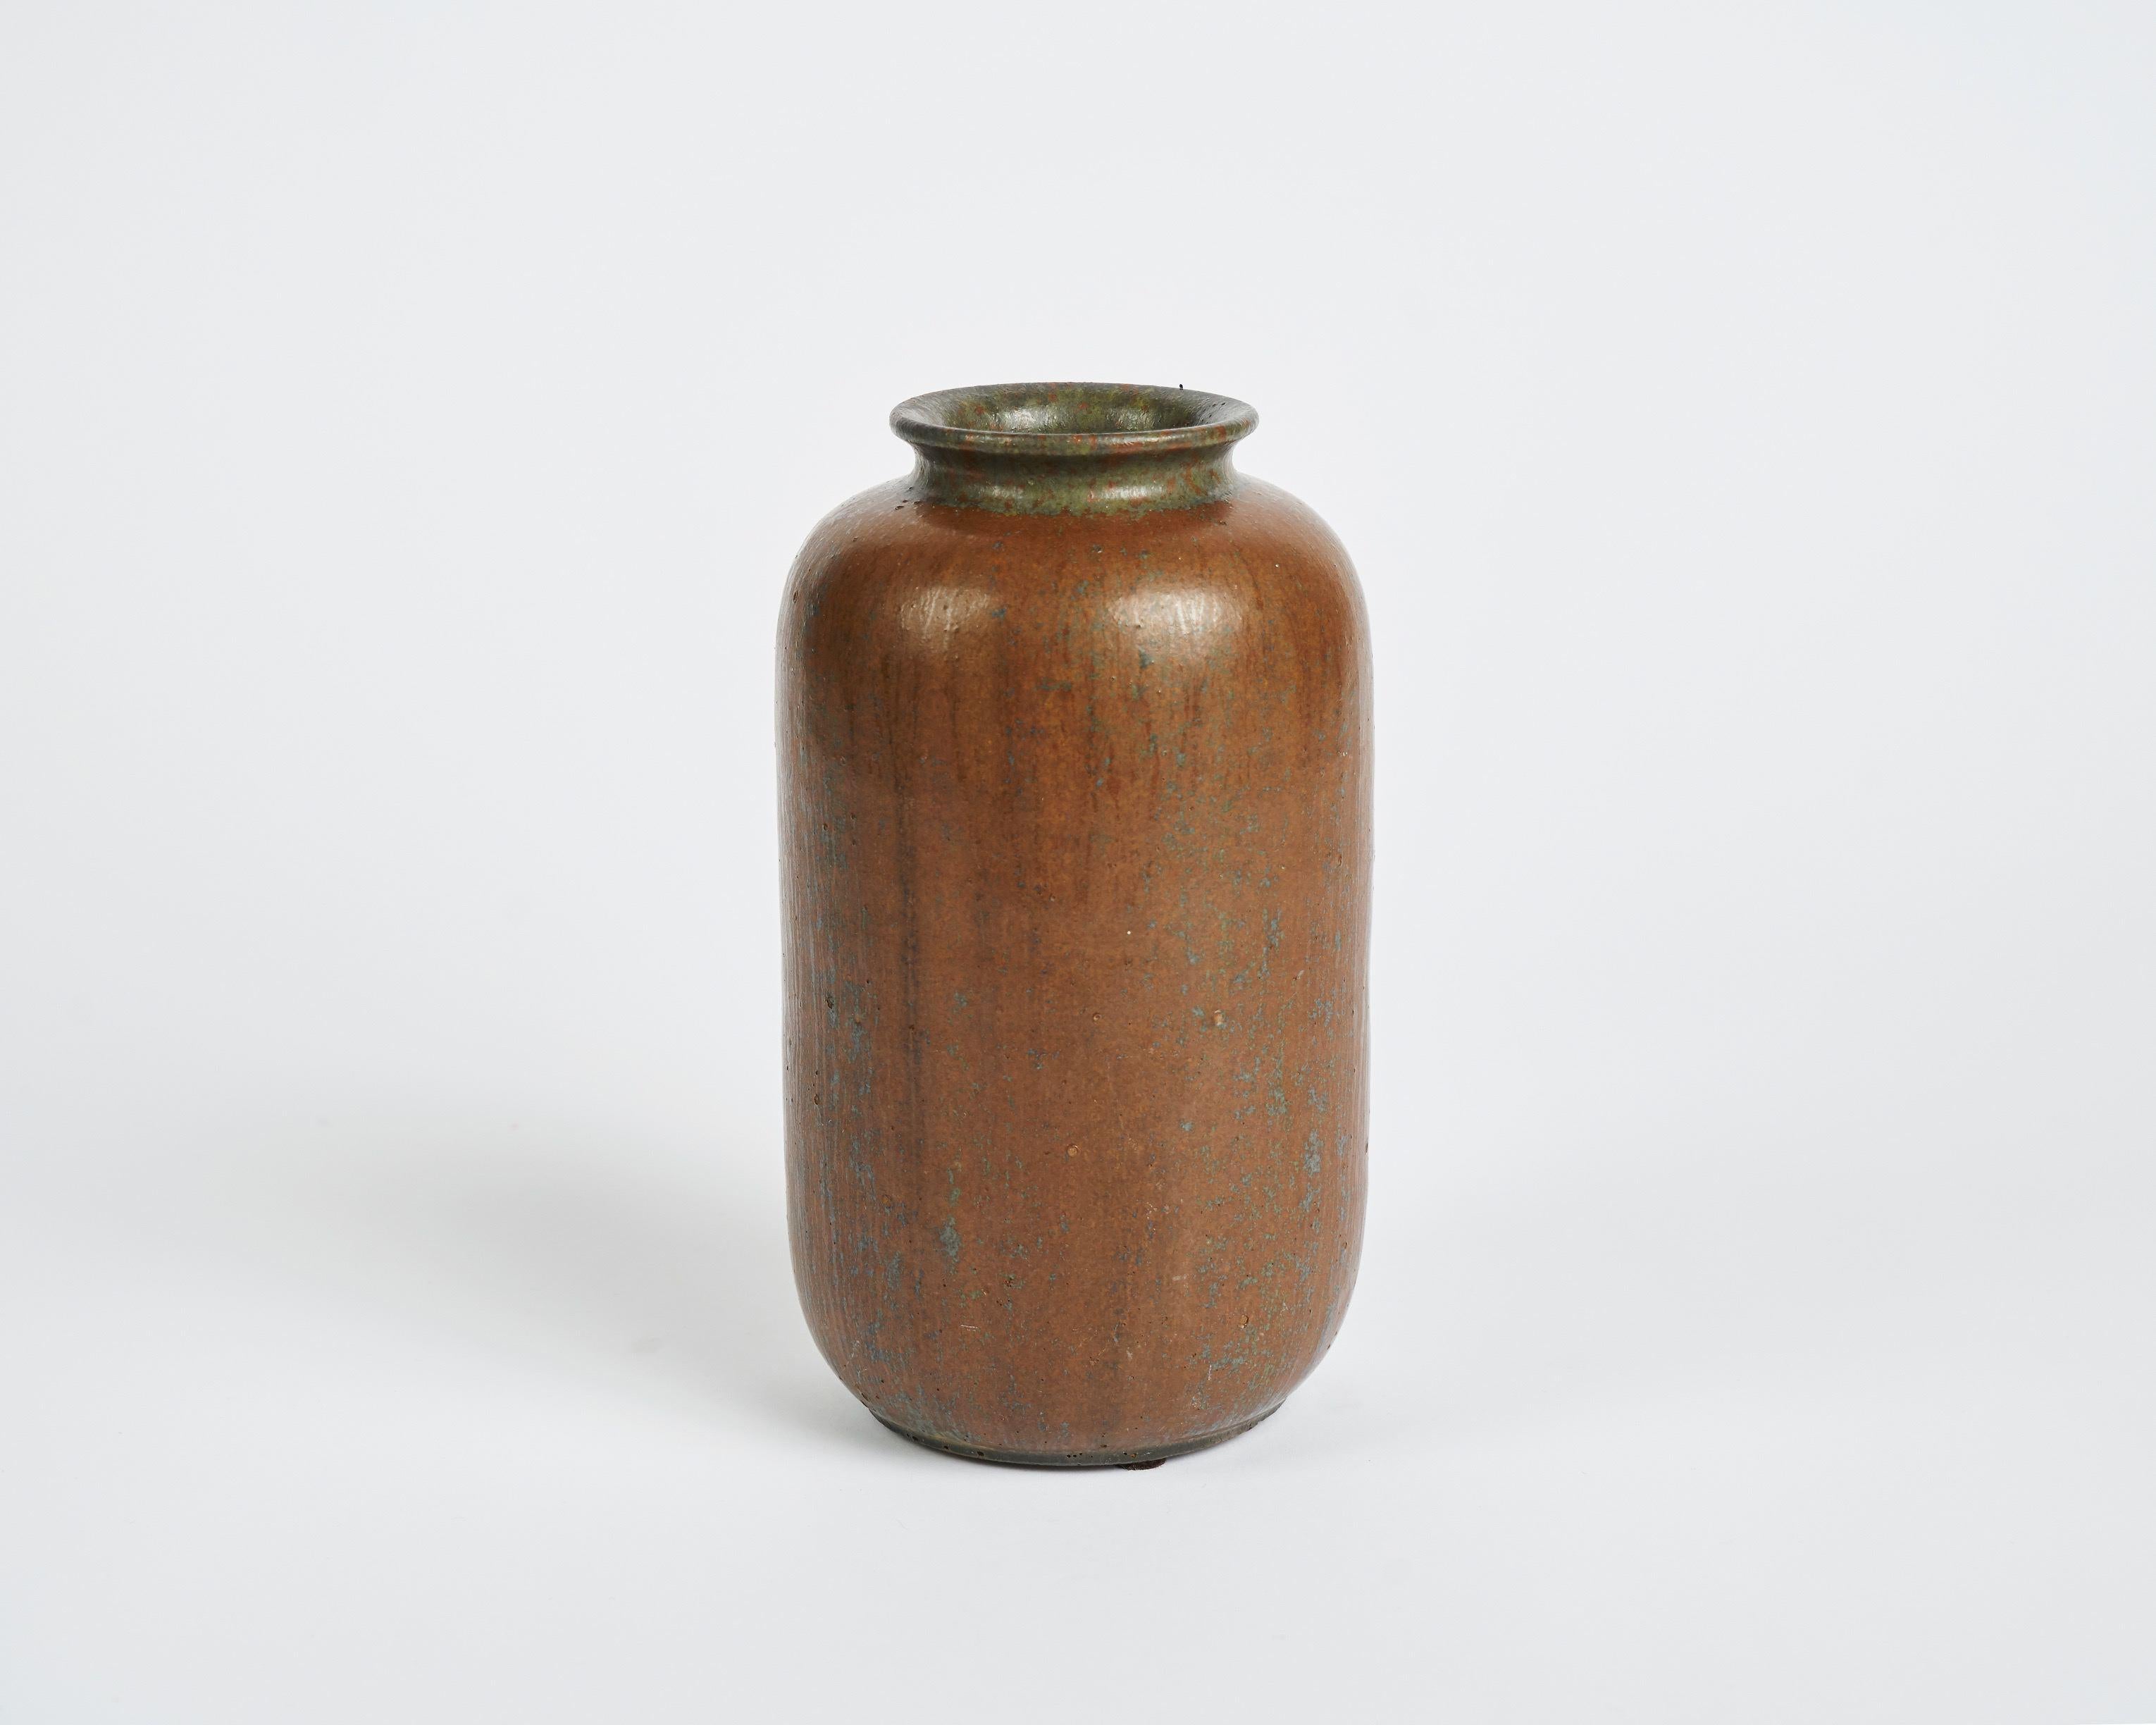 Round ceramic vase Arne Bang.

Signed: AB
Numbered: 27.